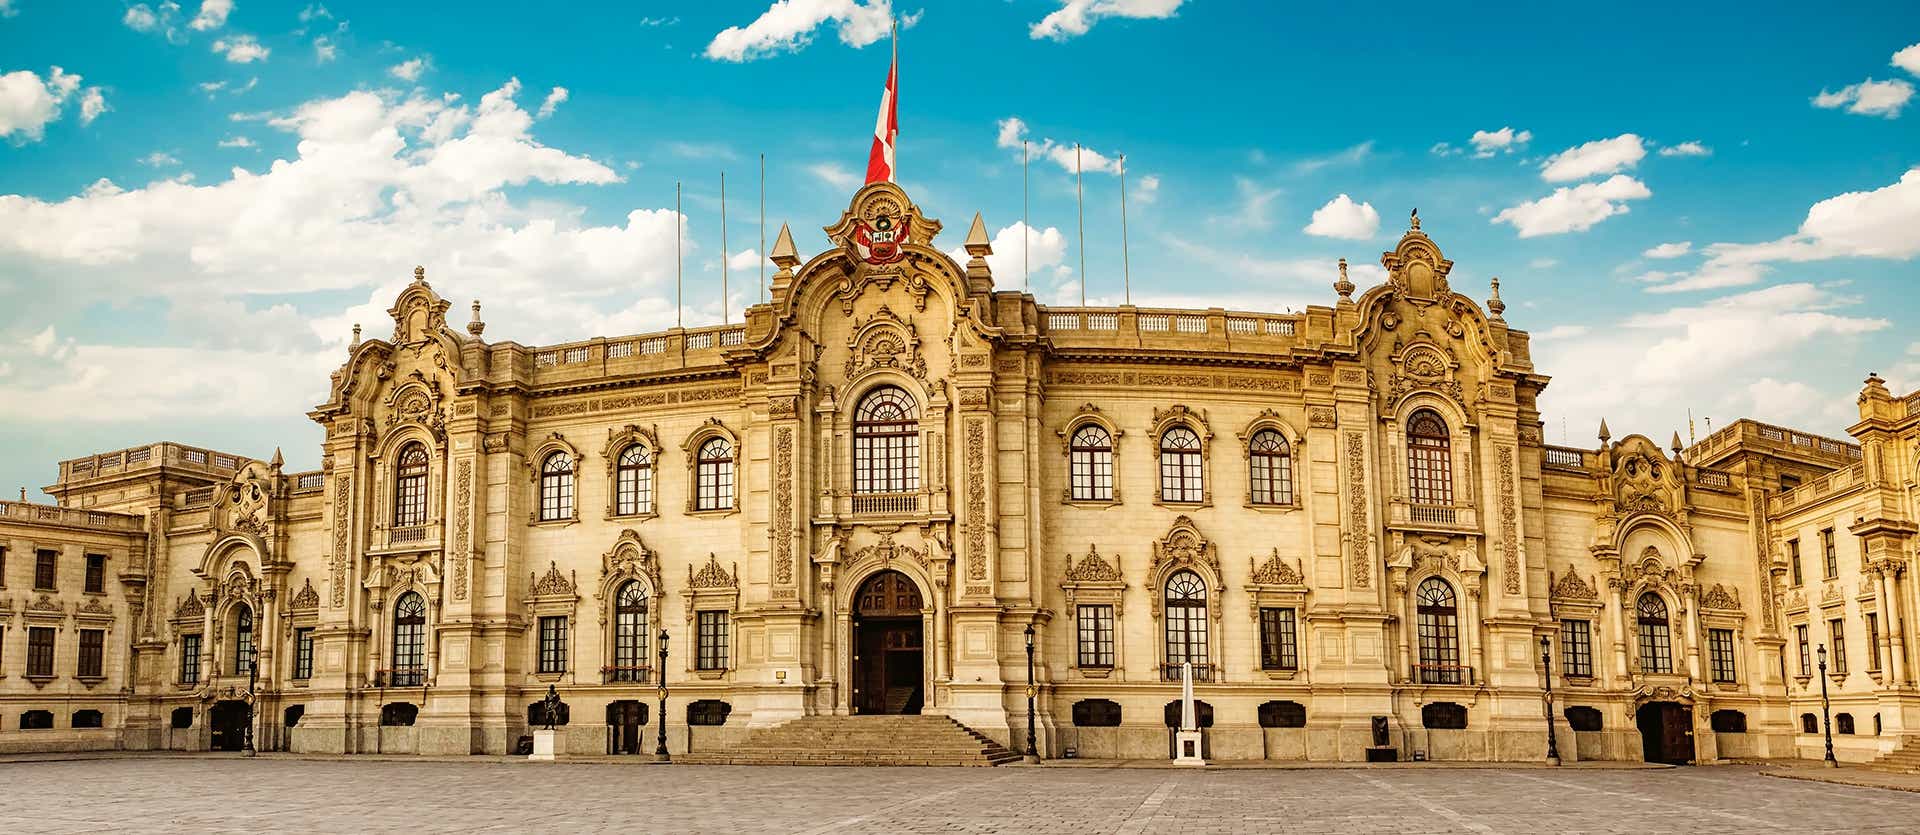 Government Palace <span class="iconos separador"></span> Lima